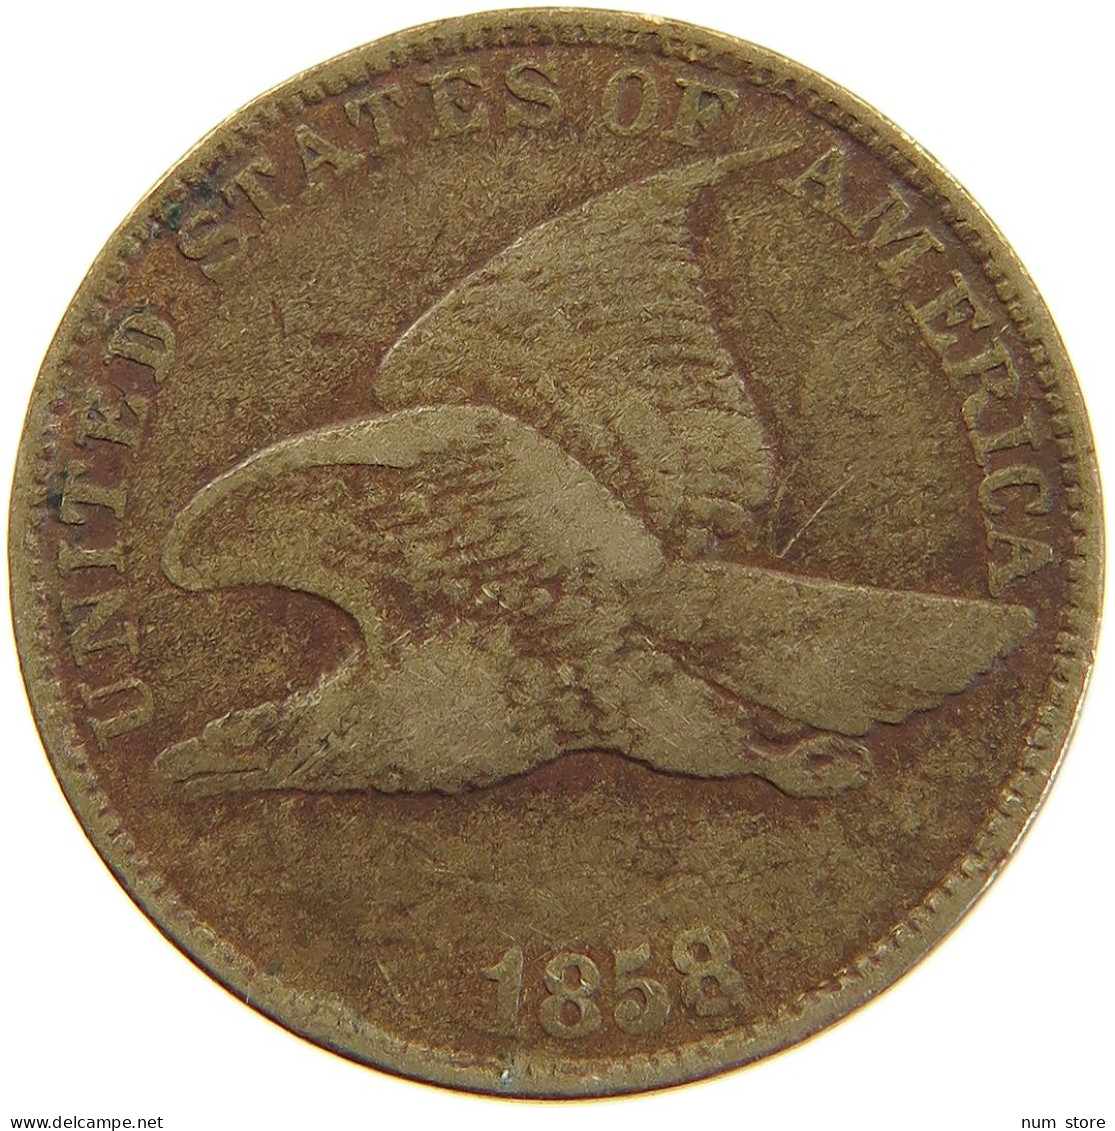 UNITED STATES OF AMERICA CENT 1858 FLYING EAGLE #c056 0069 - 1856-1858: Flying Eagle